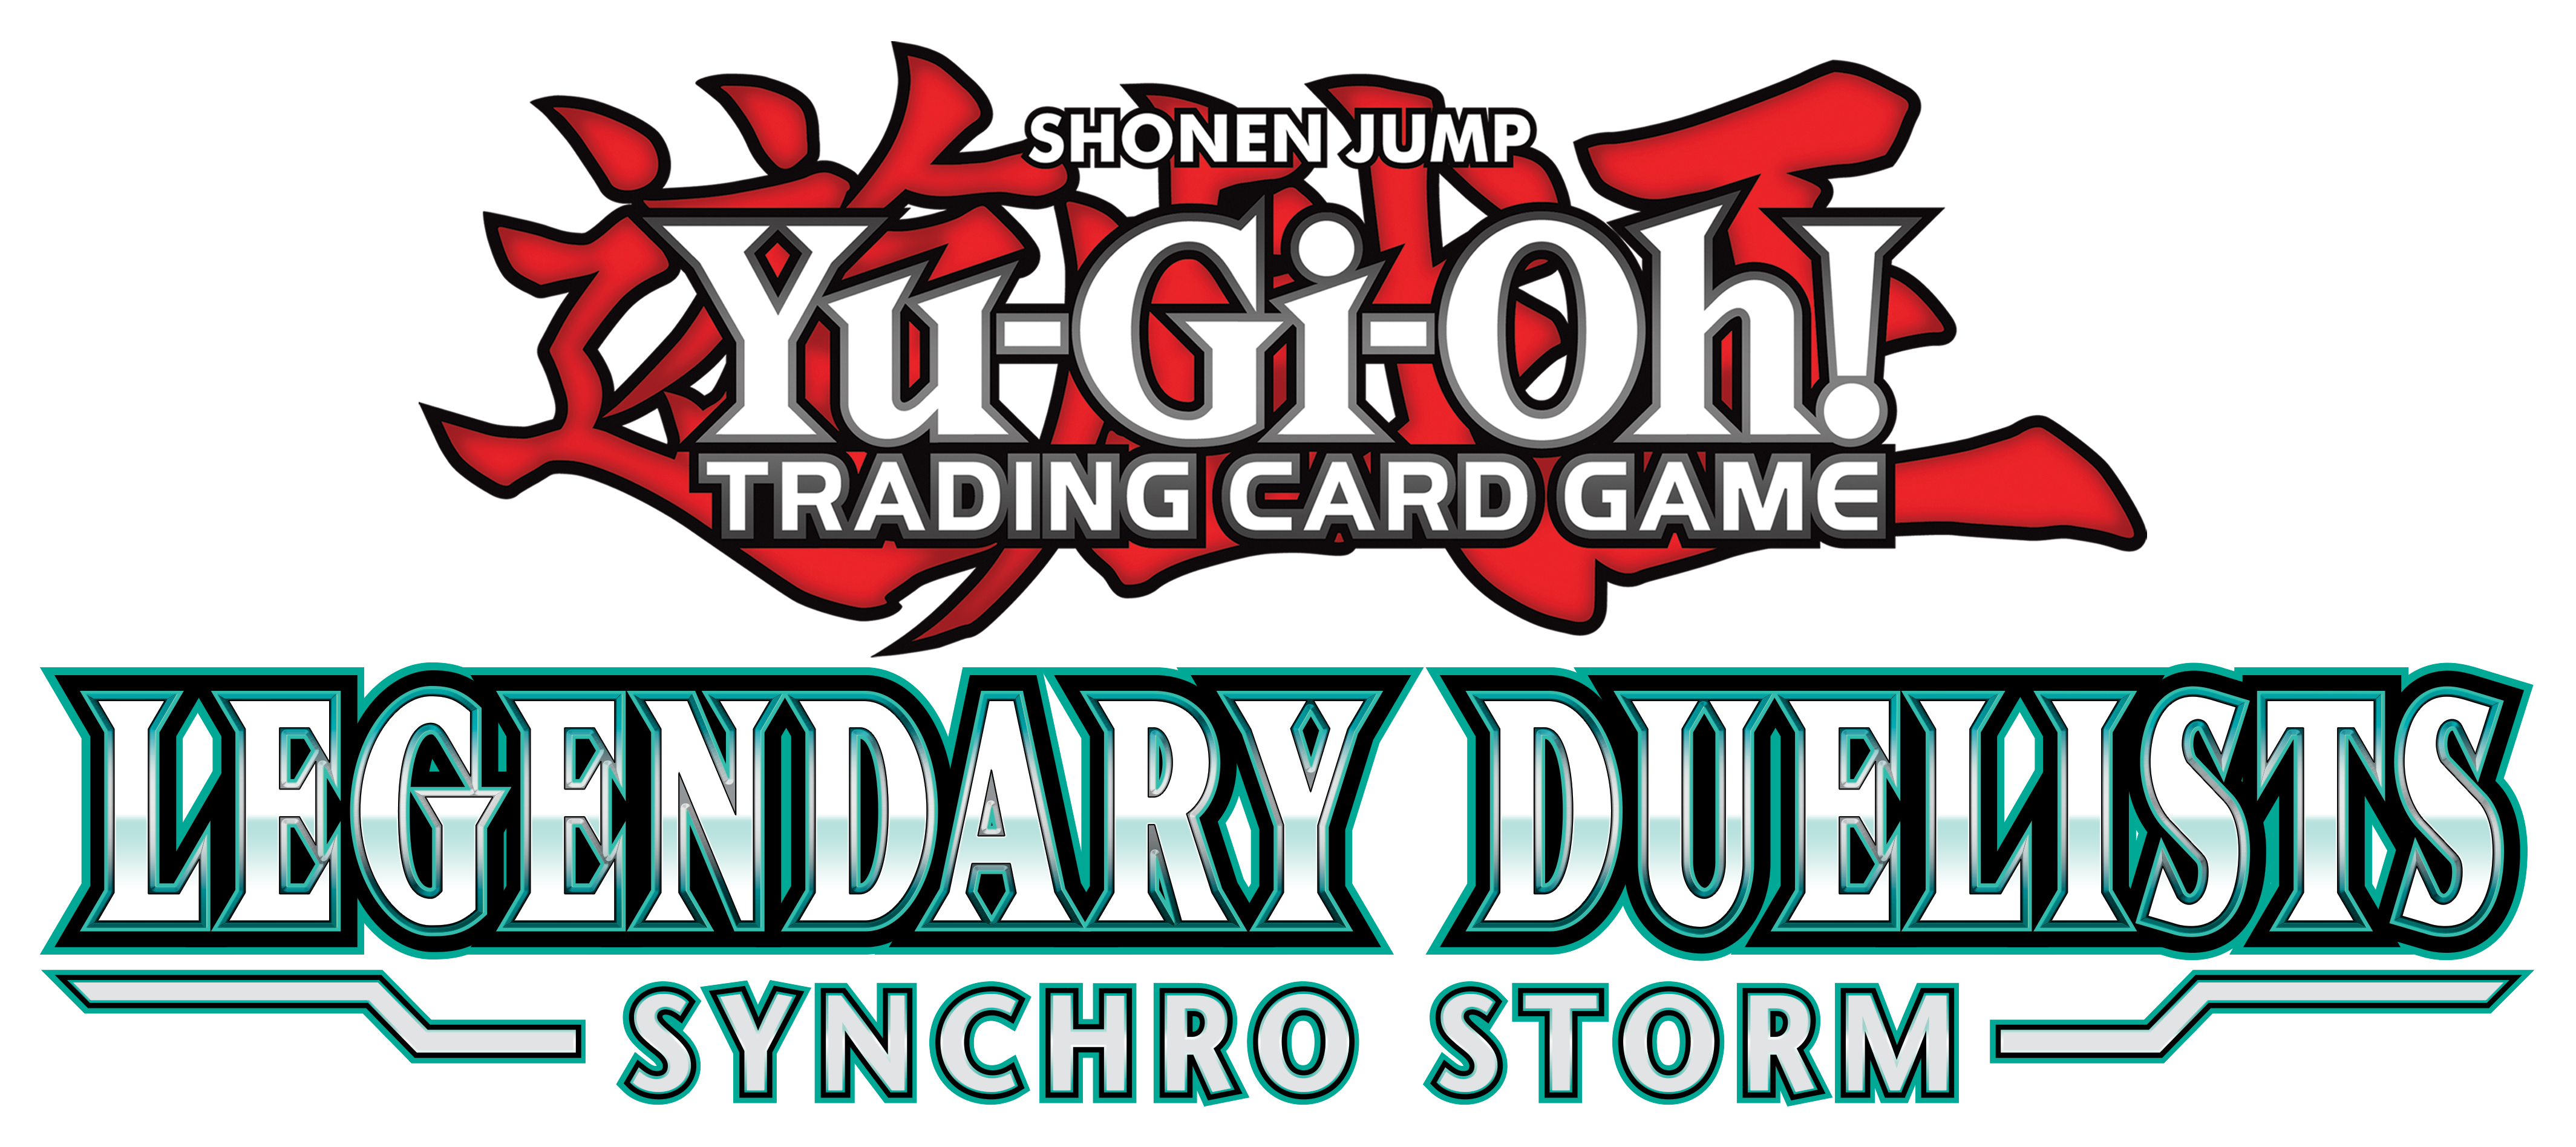 Legendary Duelists: Synchro Storm